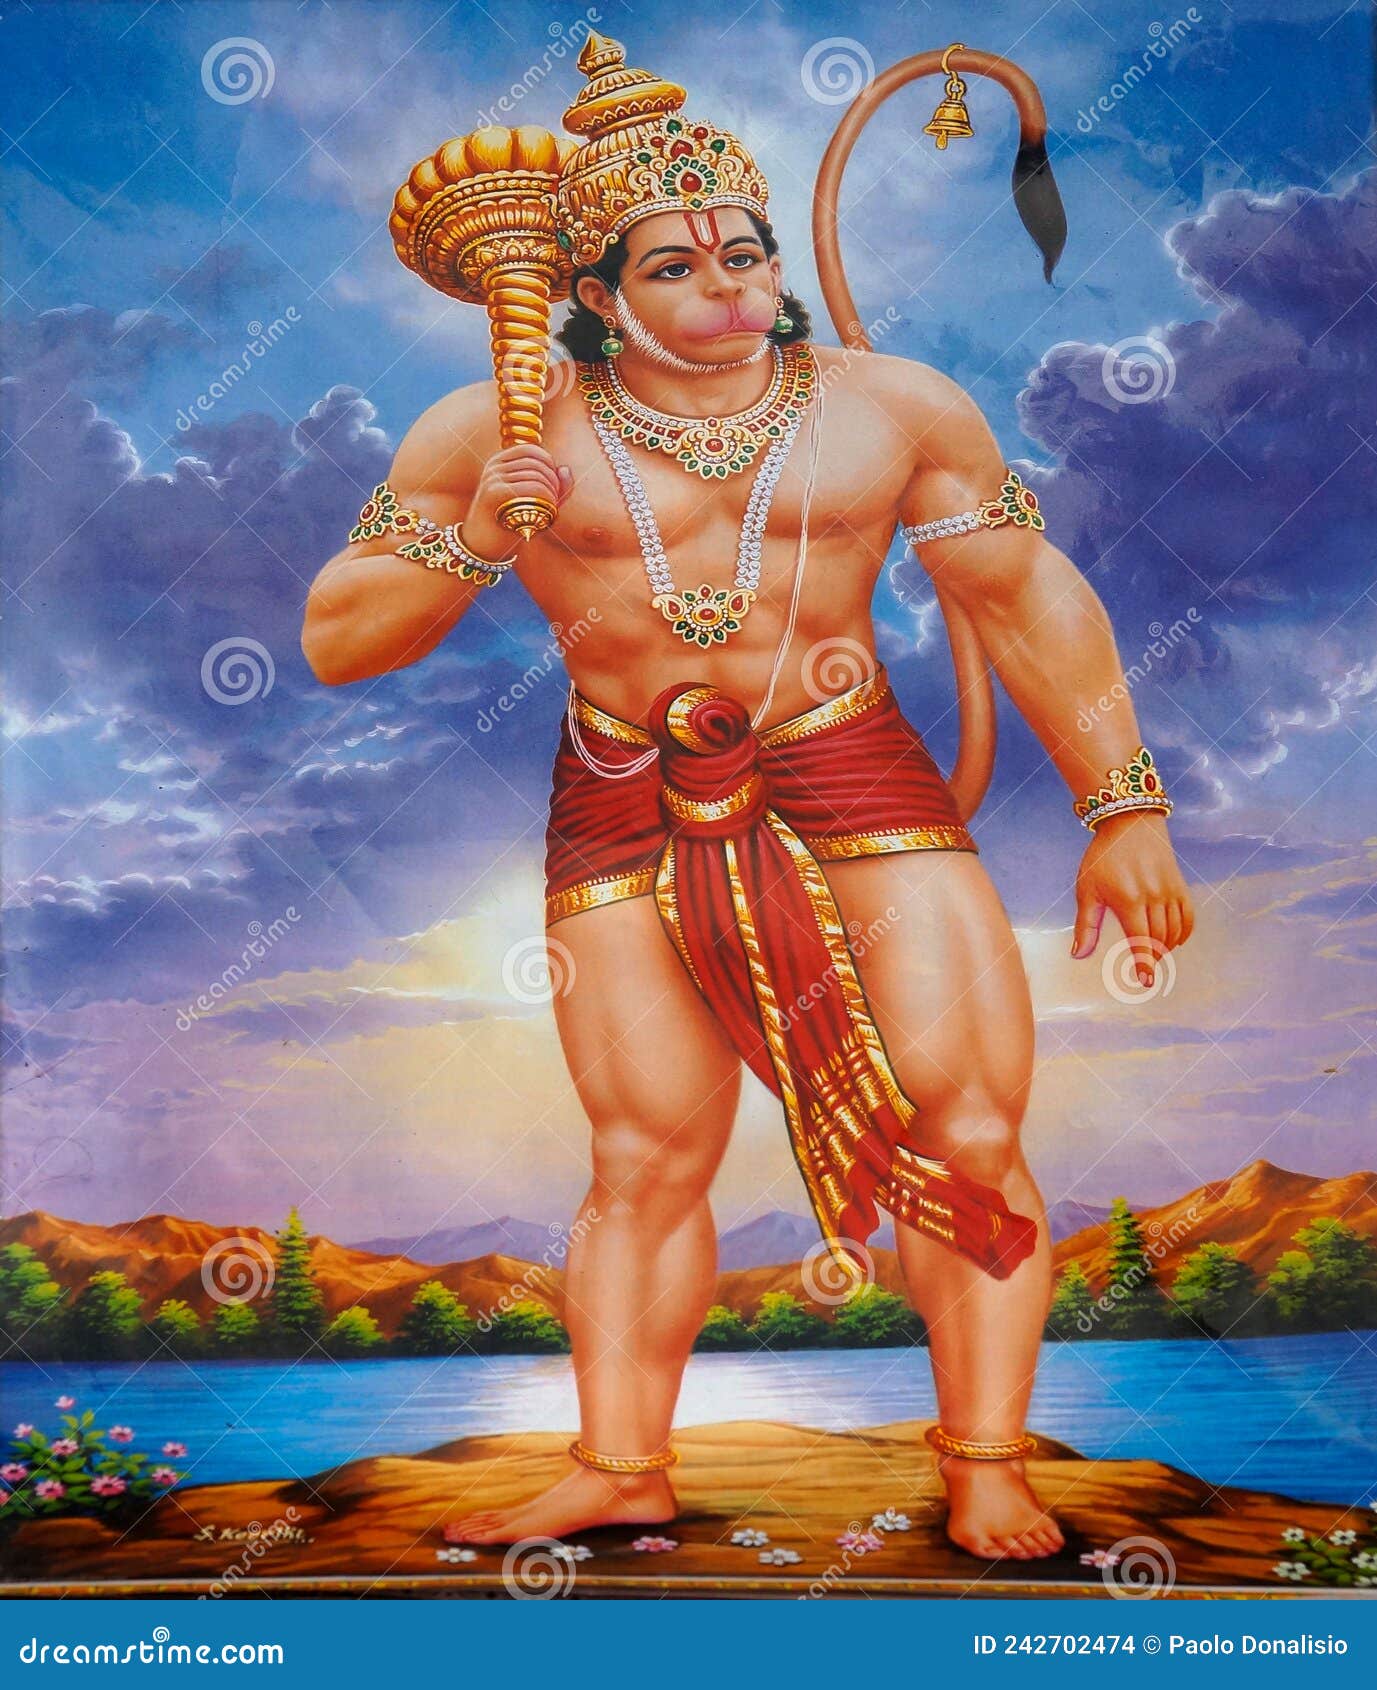 poster of lord hanuman the monkey god for sale at kumbh mela in nashik, maharashtra, india